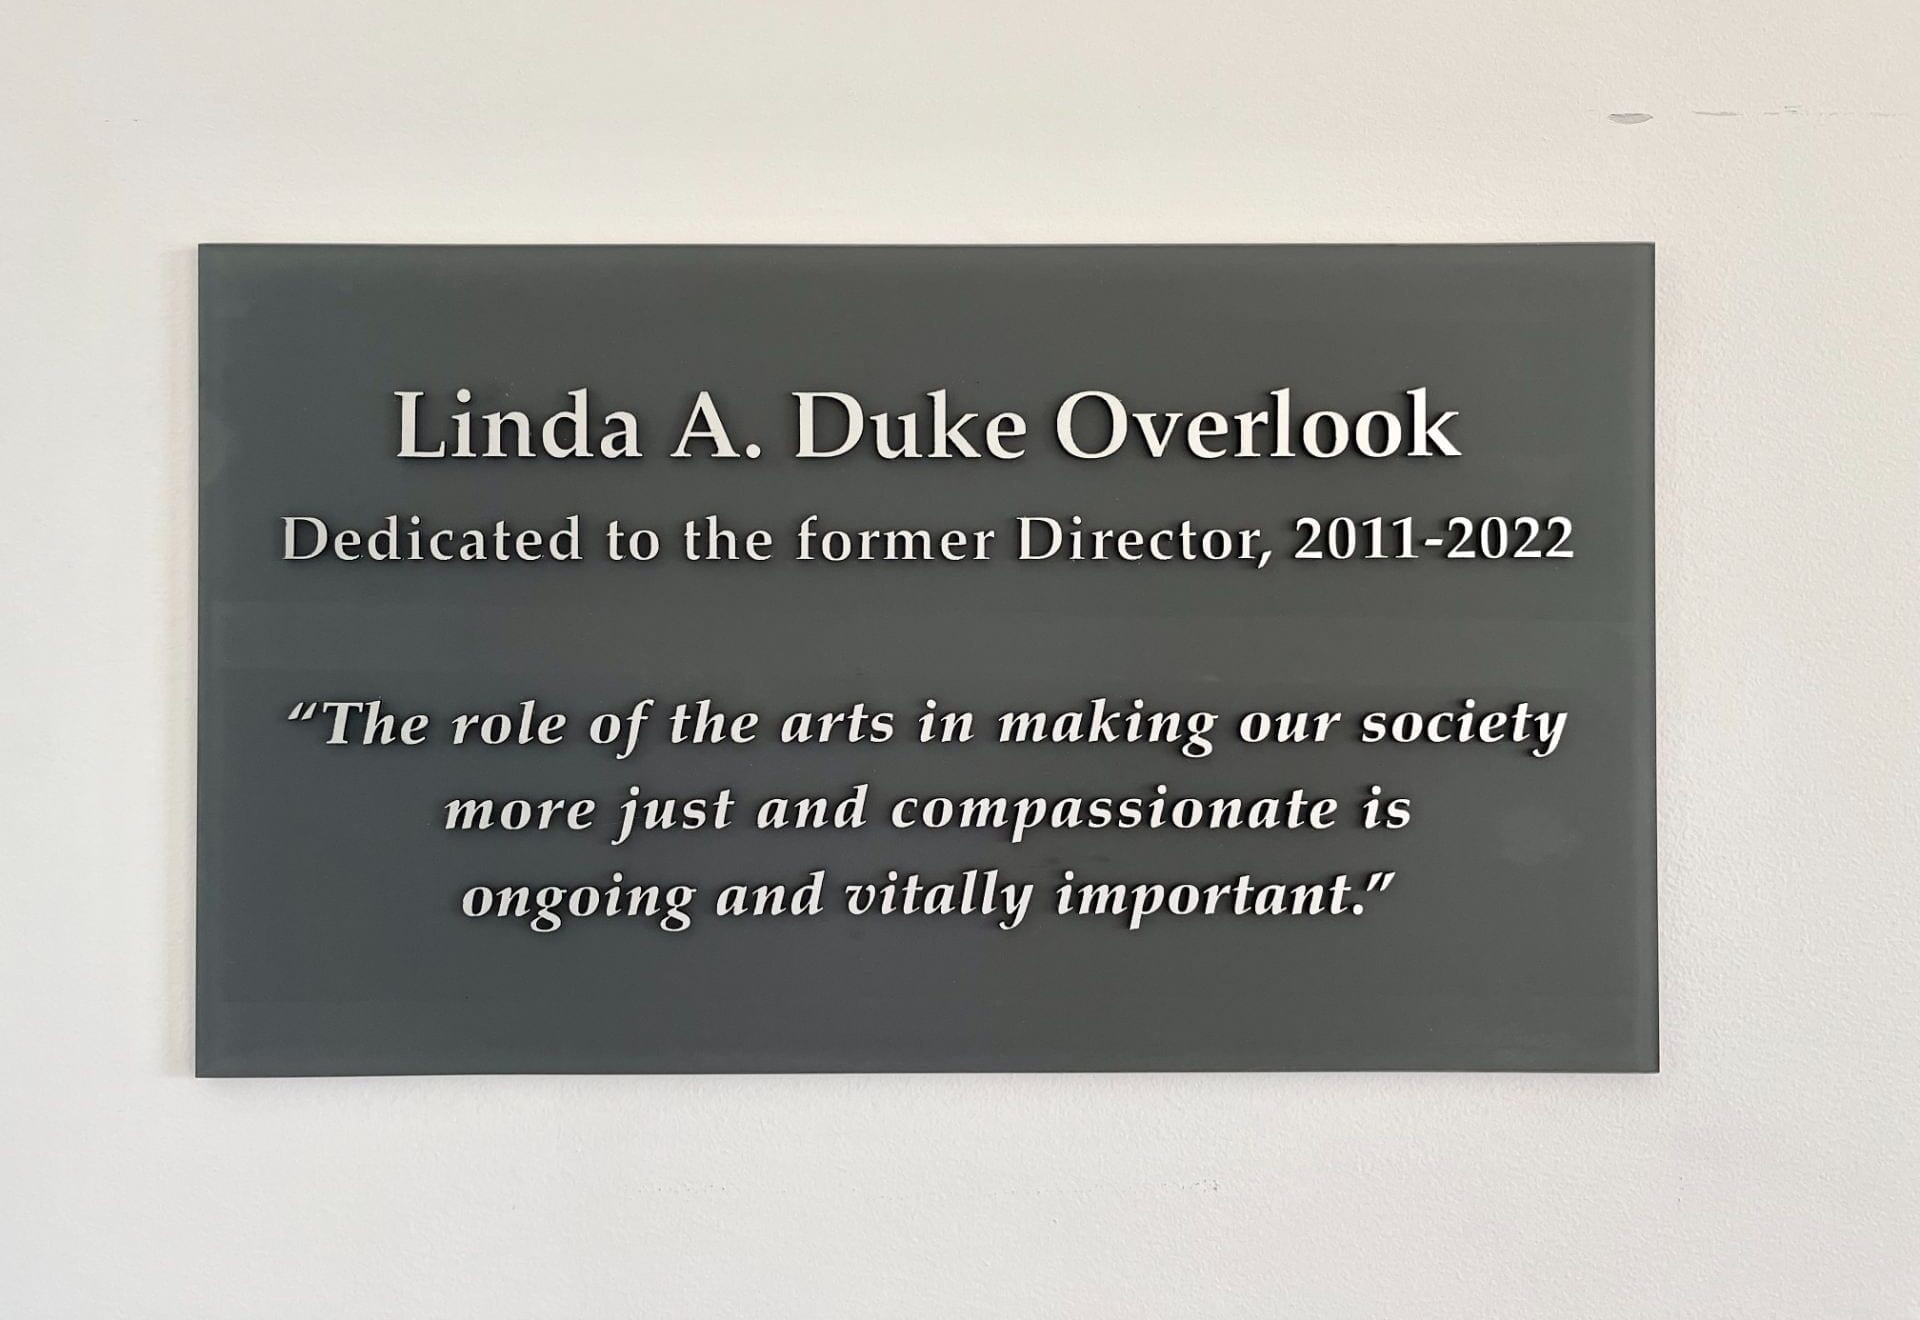 Linda A. Duke Overlook at the Beach Museum of Art